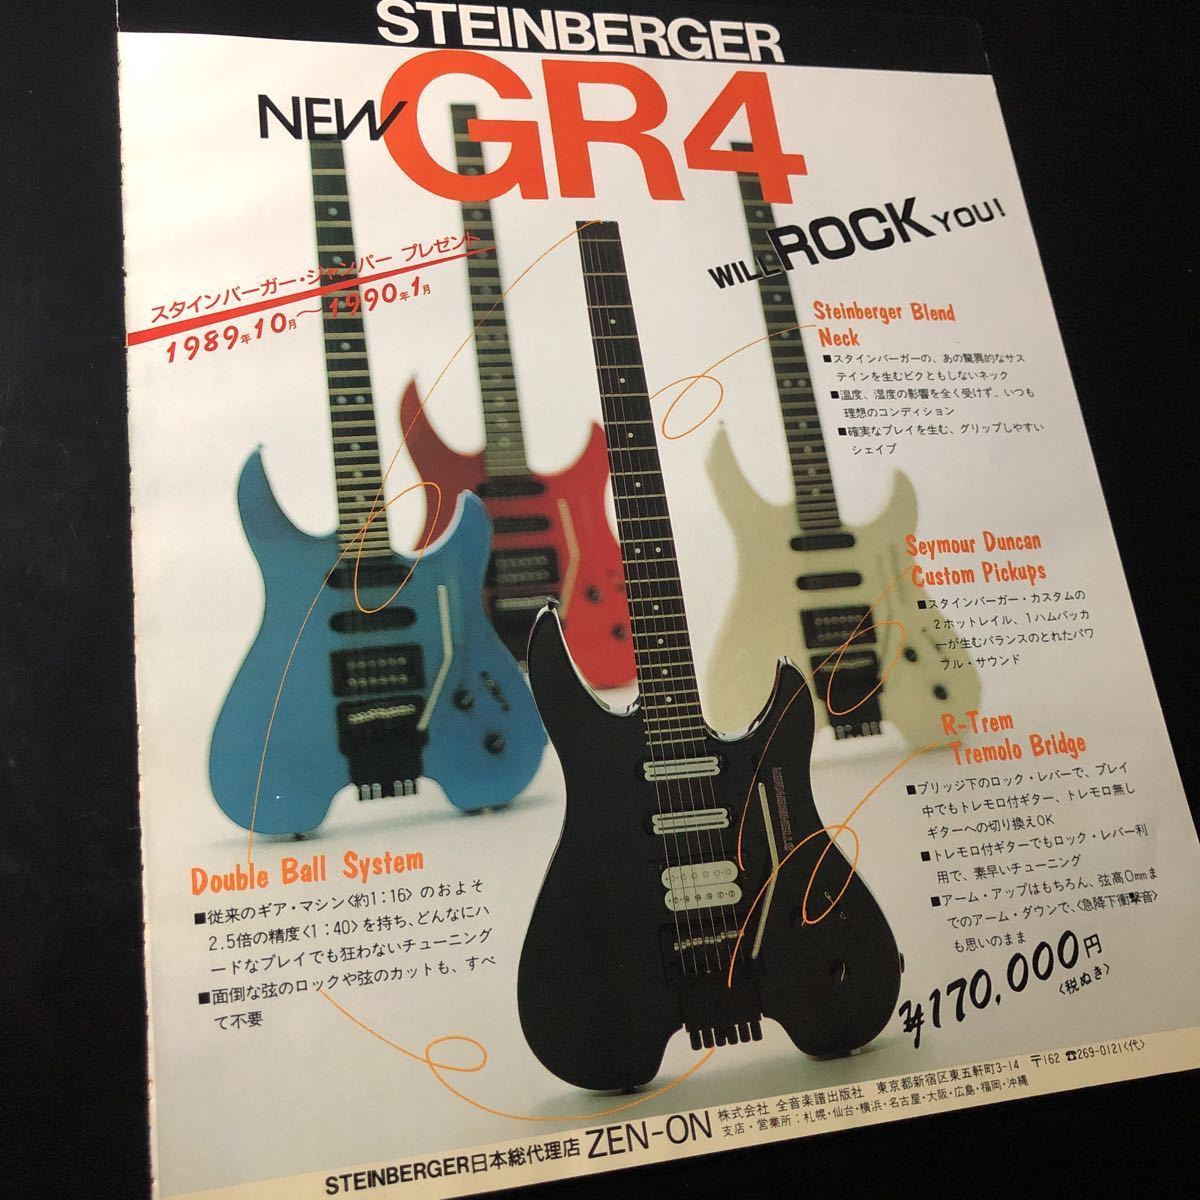 1108-1 rare scraps start Inver ga-GR4 advertisement 1989 year STEINBERGER guitar 